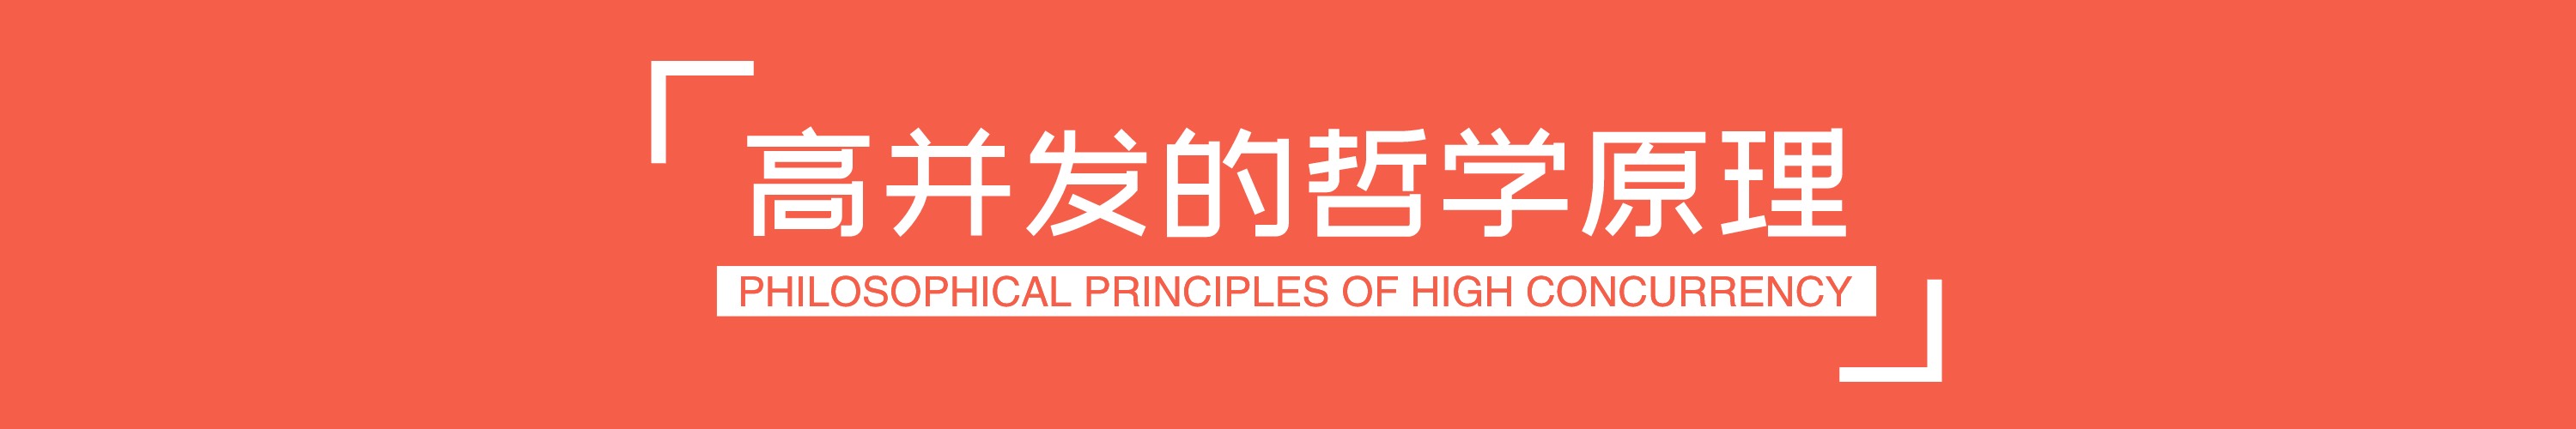 《高并发的哲学原理 Philosophical Principles of High Concurrency》 - 图1